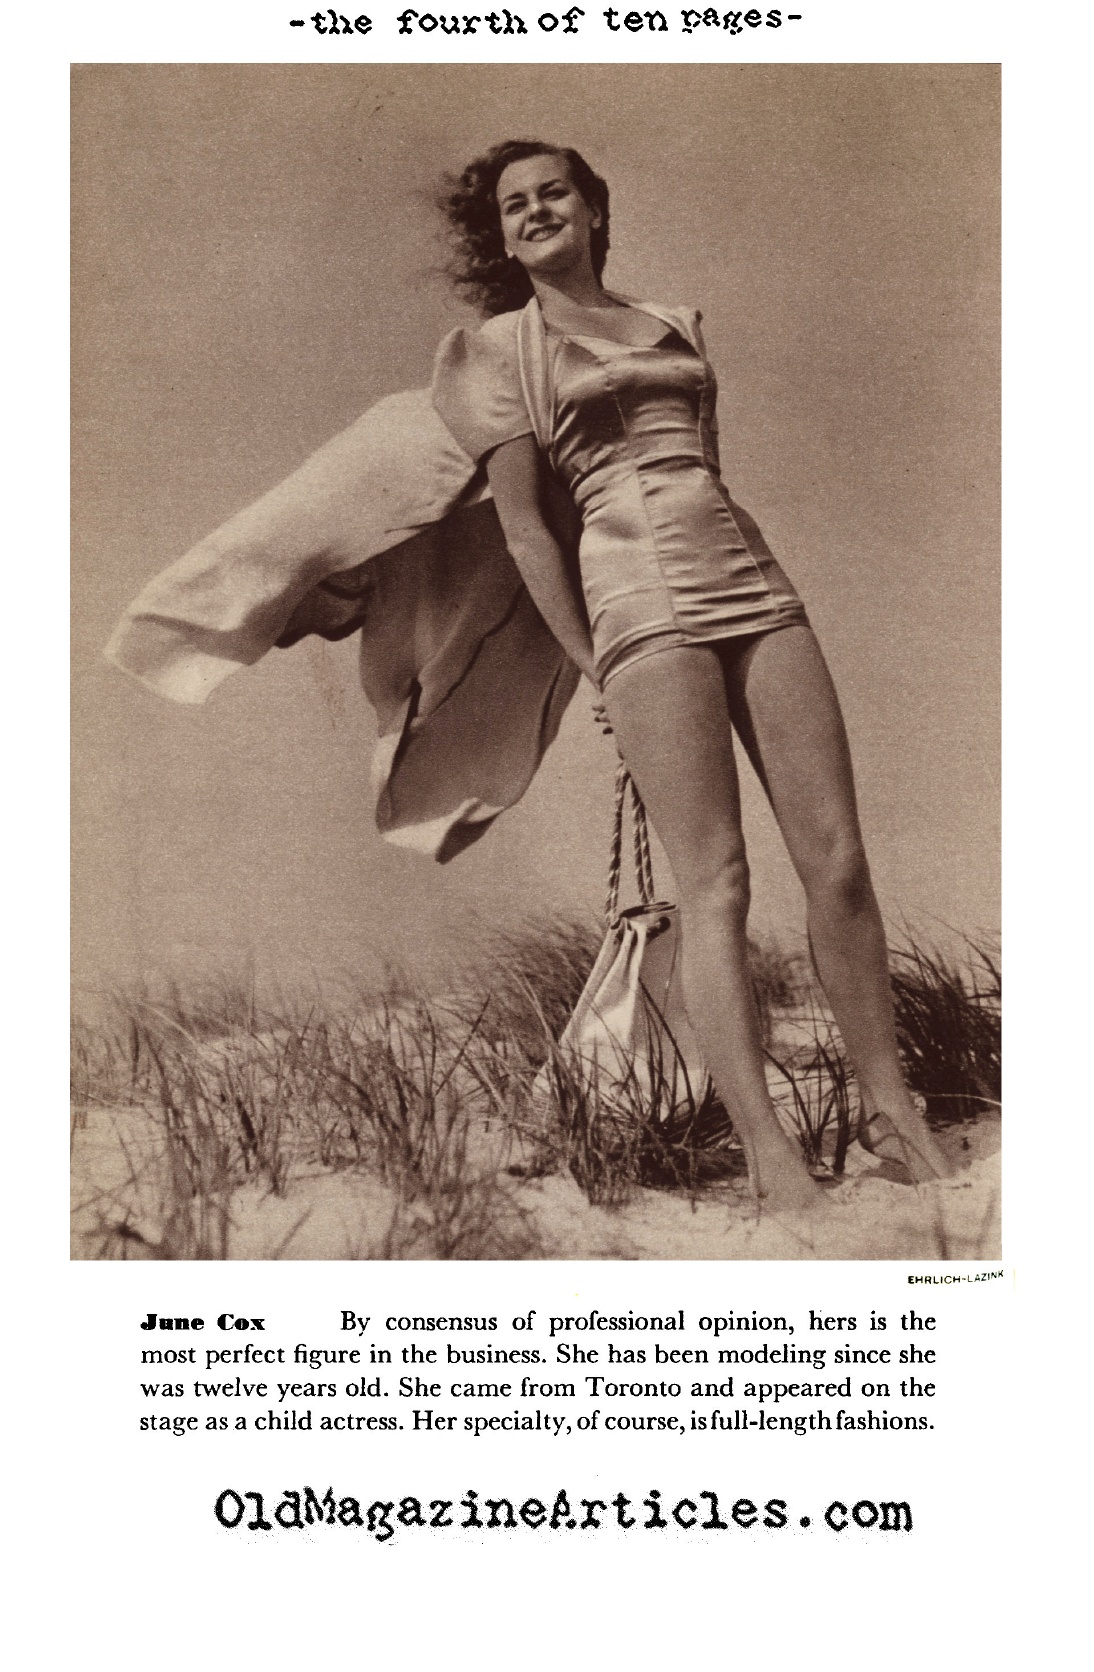 The John Powers Modeling Agency (Coronet Magazine, 1941)